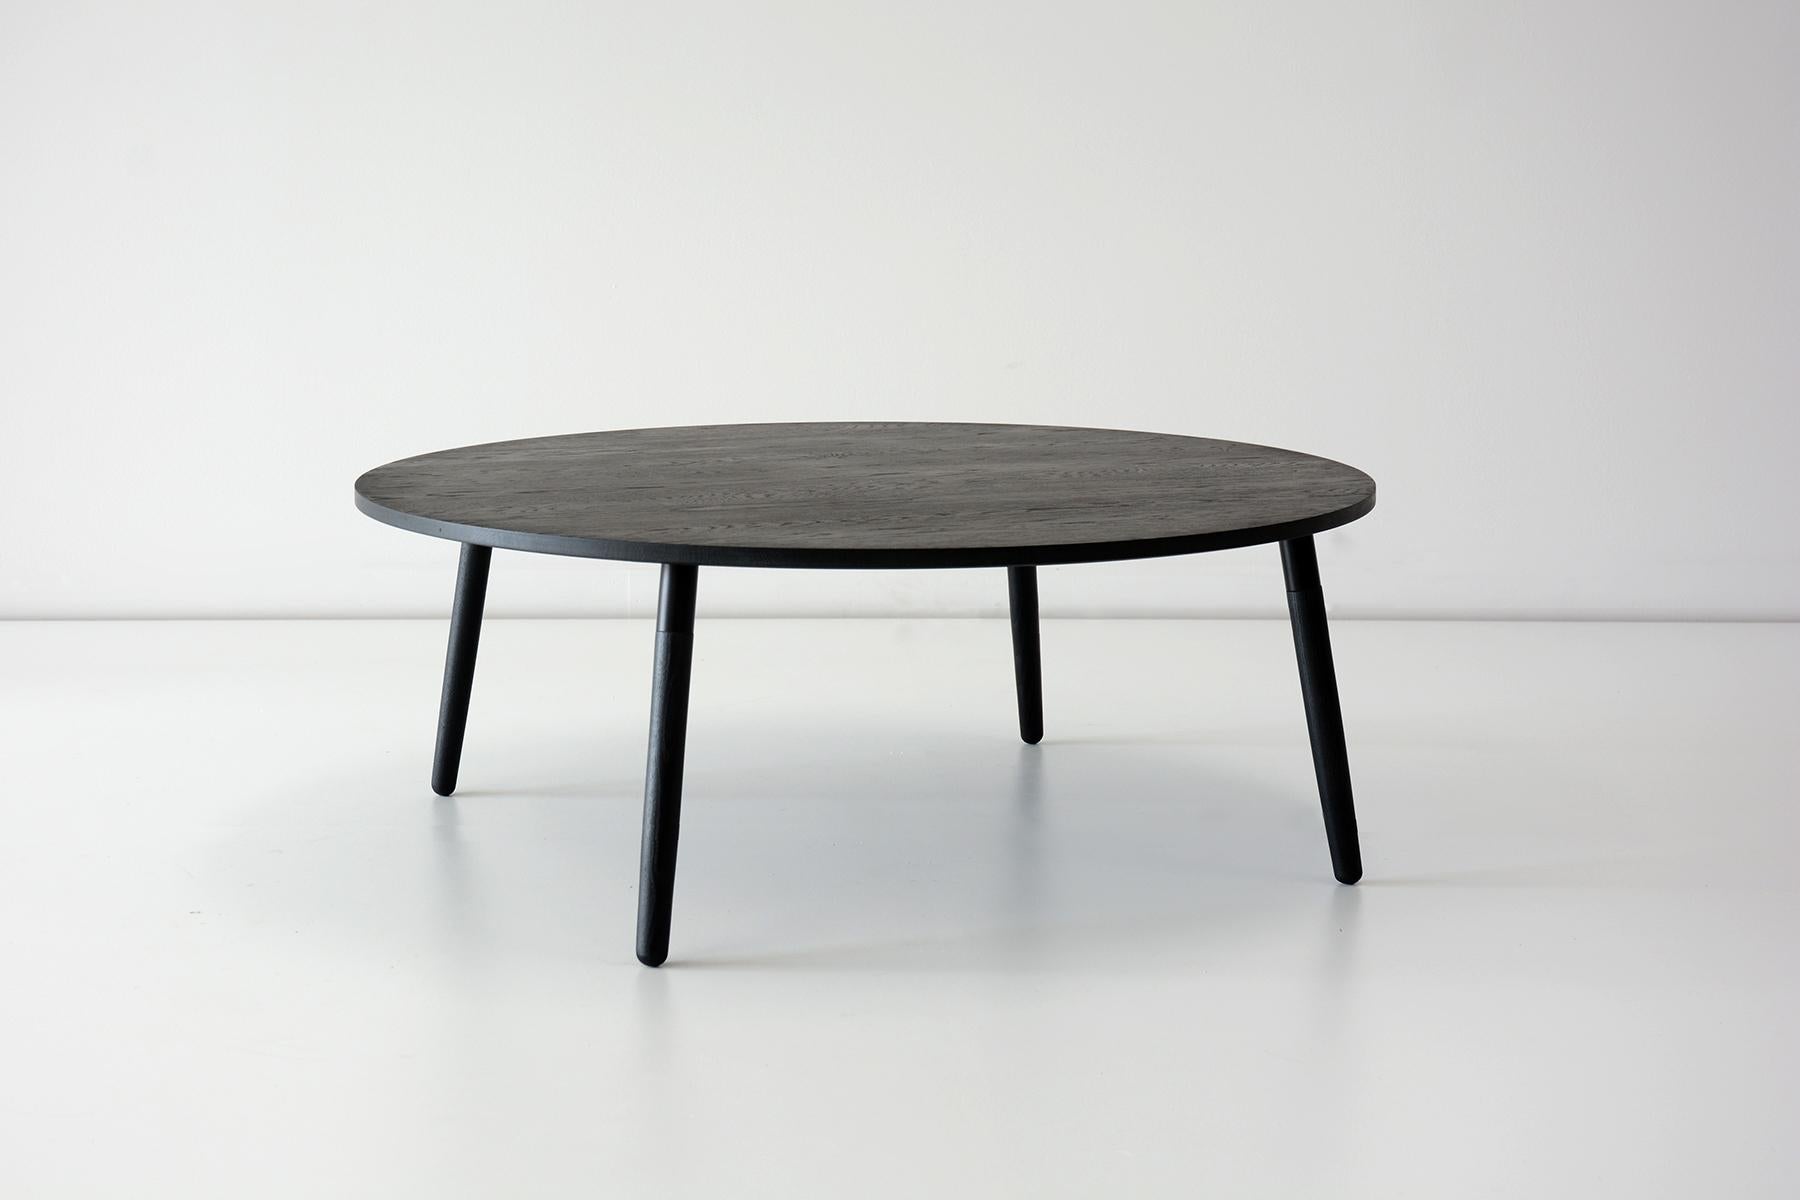 Oak large crescenttown coffee table by Hollis & Morris
Dimensions: Diameter 42